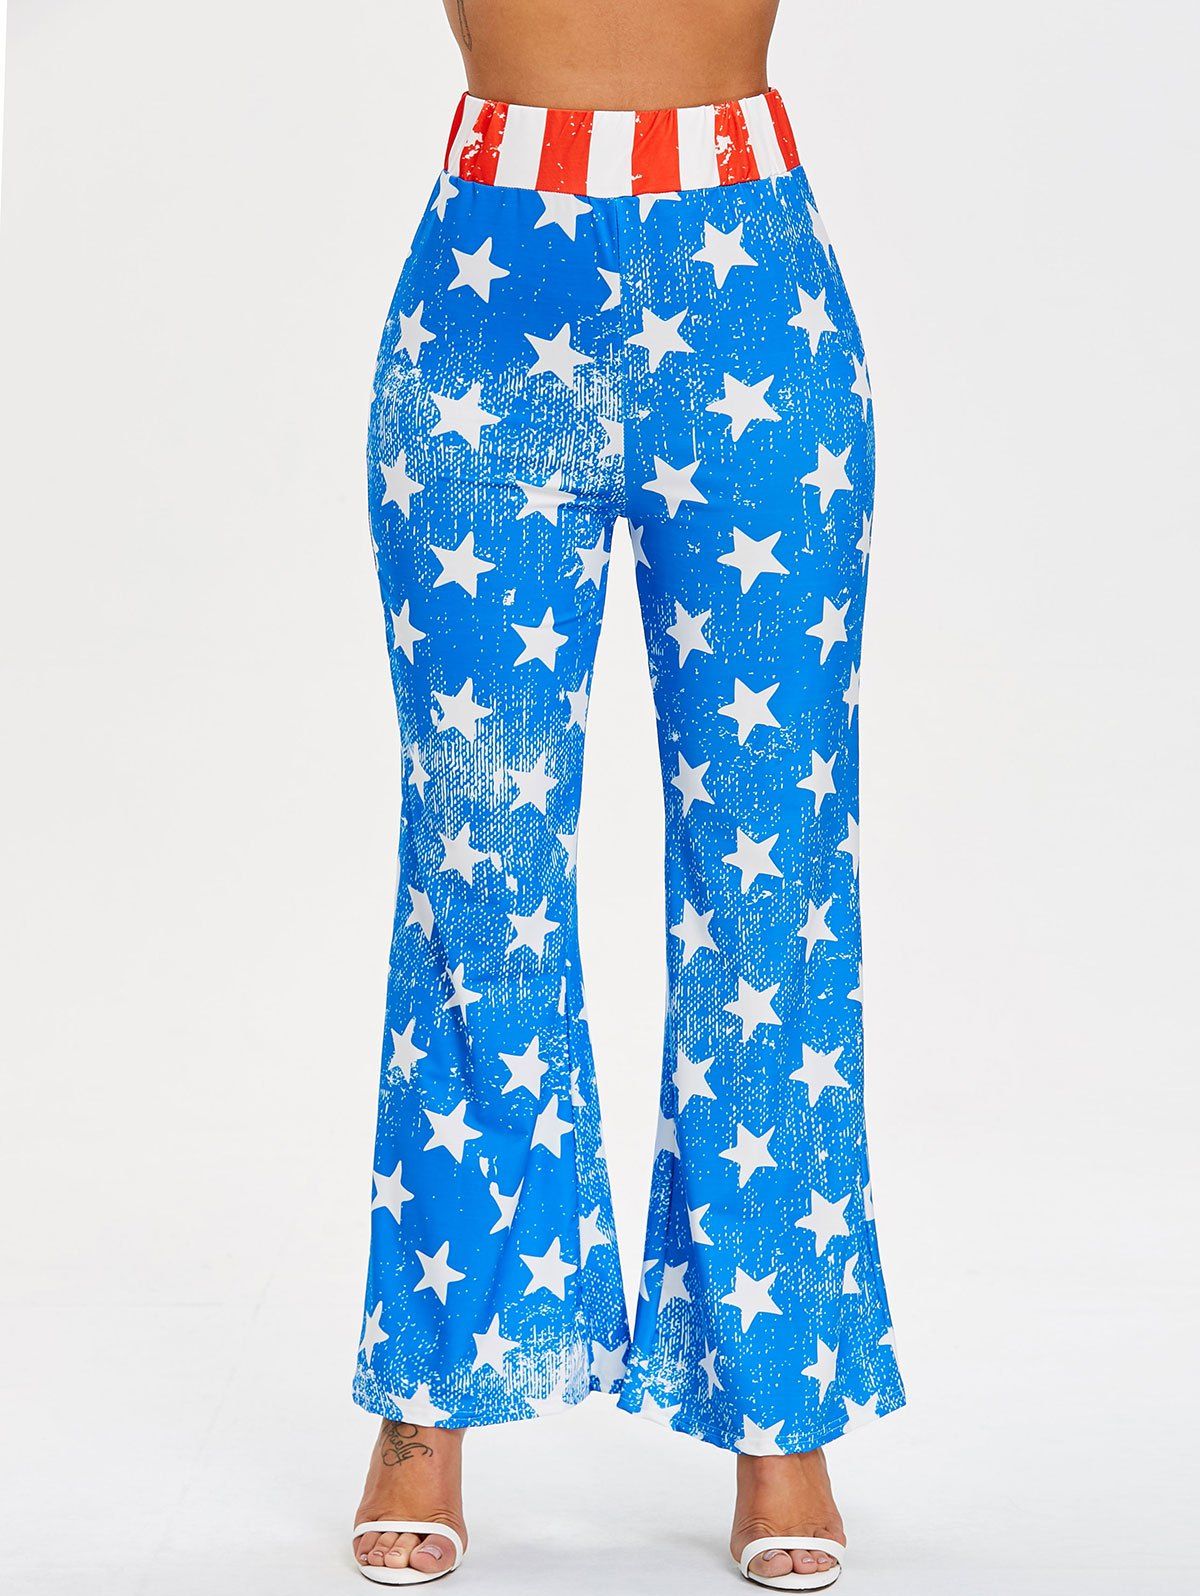 Elastic Waist Star Print Pants - COLORMIX XL